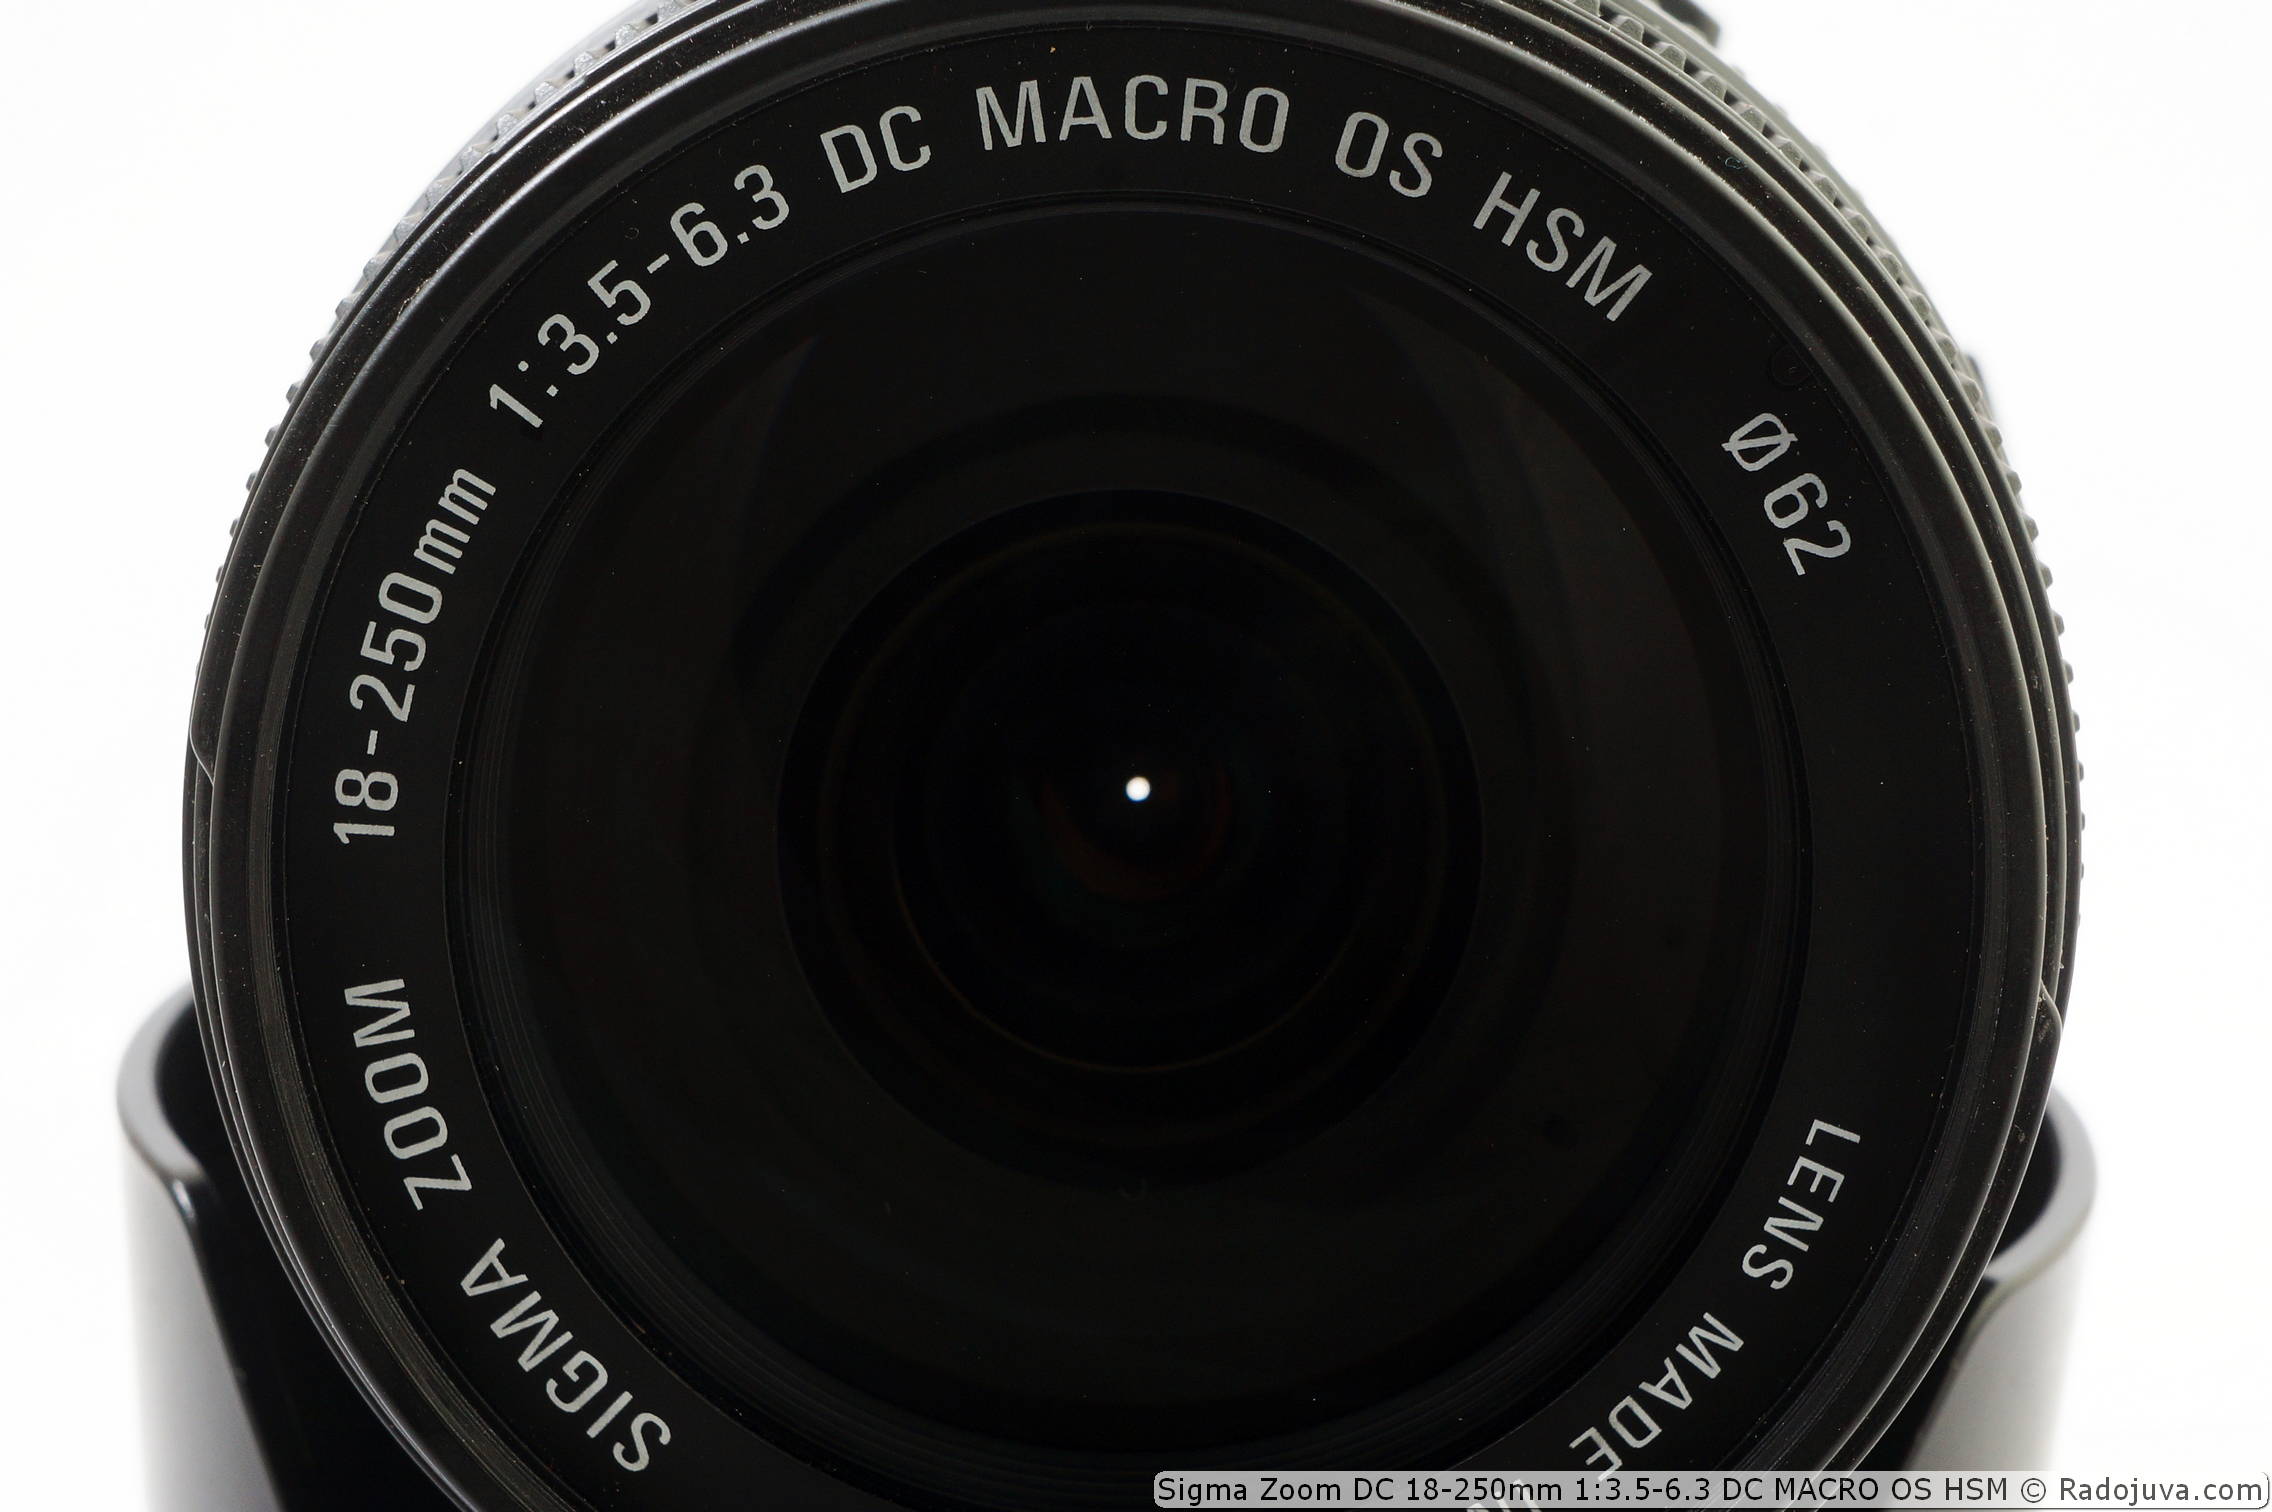 Sigma Zoom DC 18-250mm 1:3.5-6.3 DC MACRO OS HSM